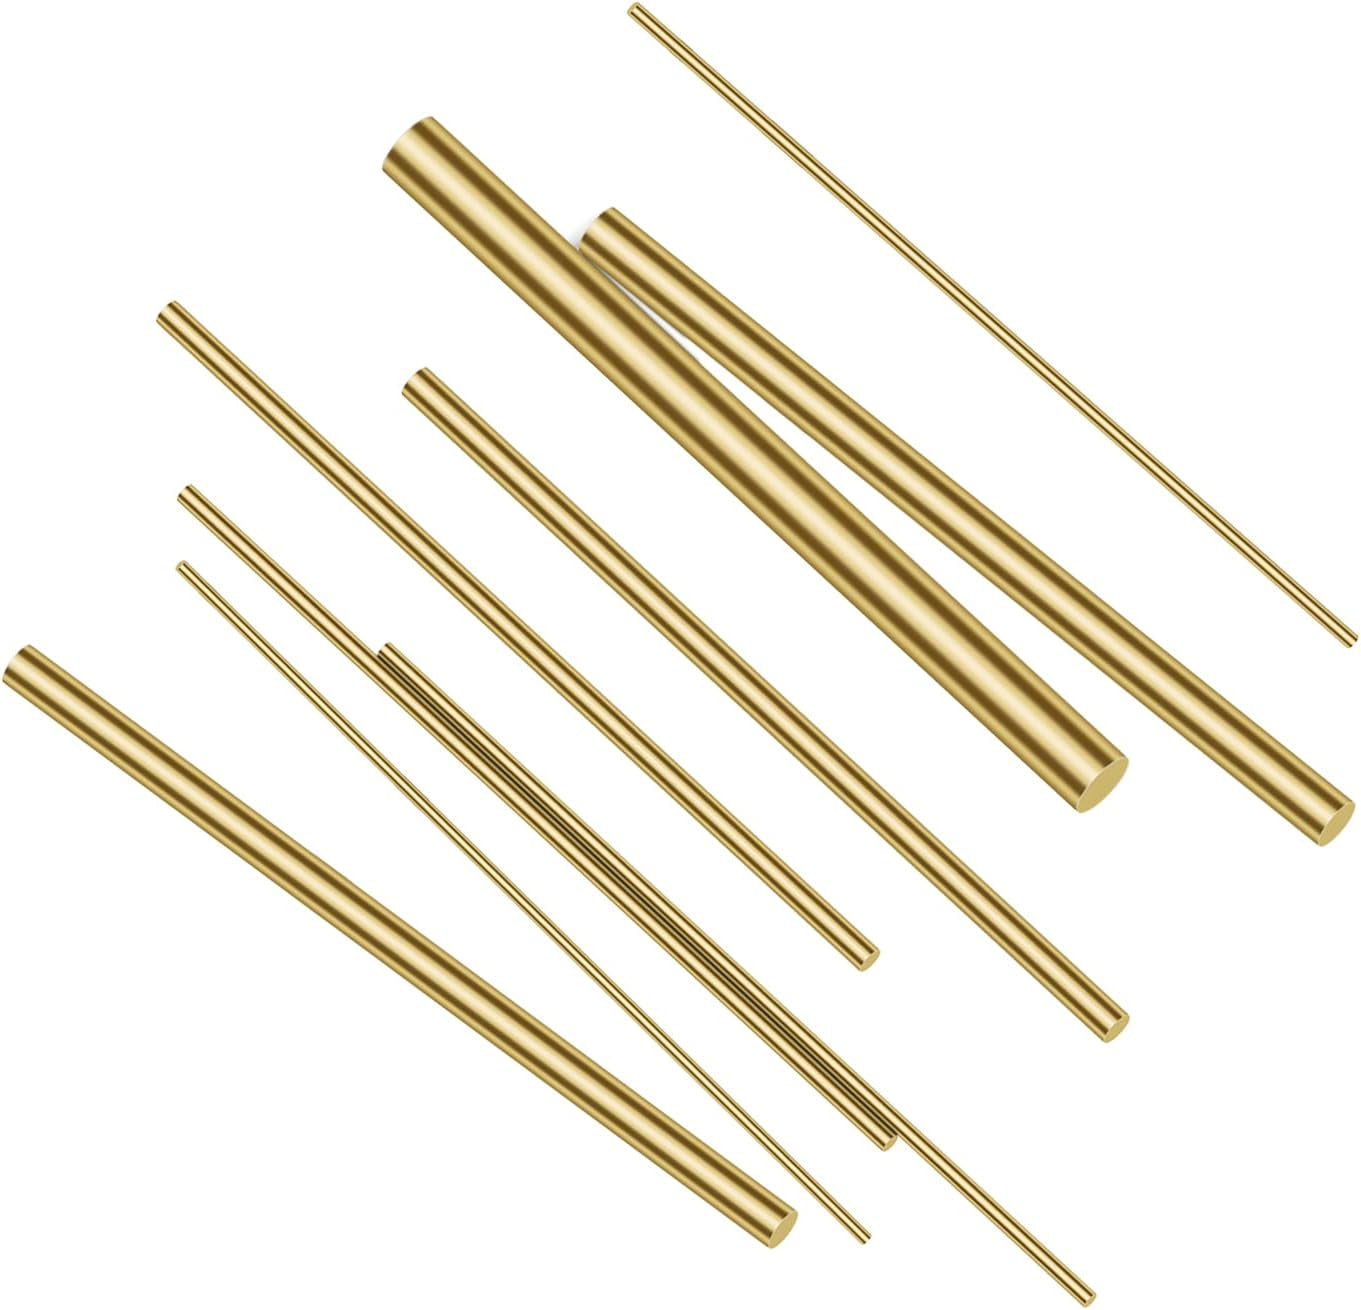 Brass round Rods Bar Assorted Diameter 1Mm-8Mm for DIY Craft (15 PCS)